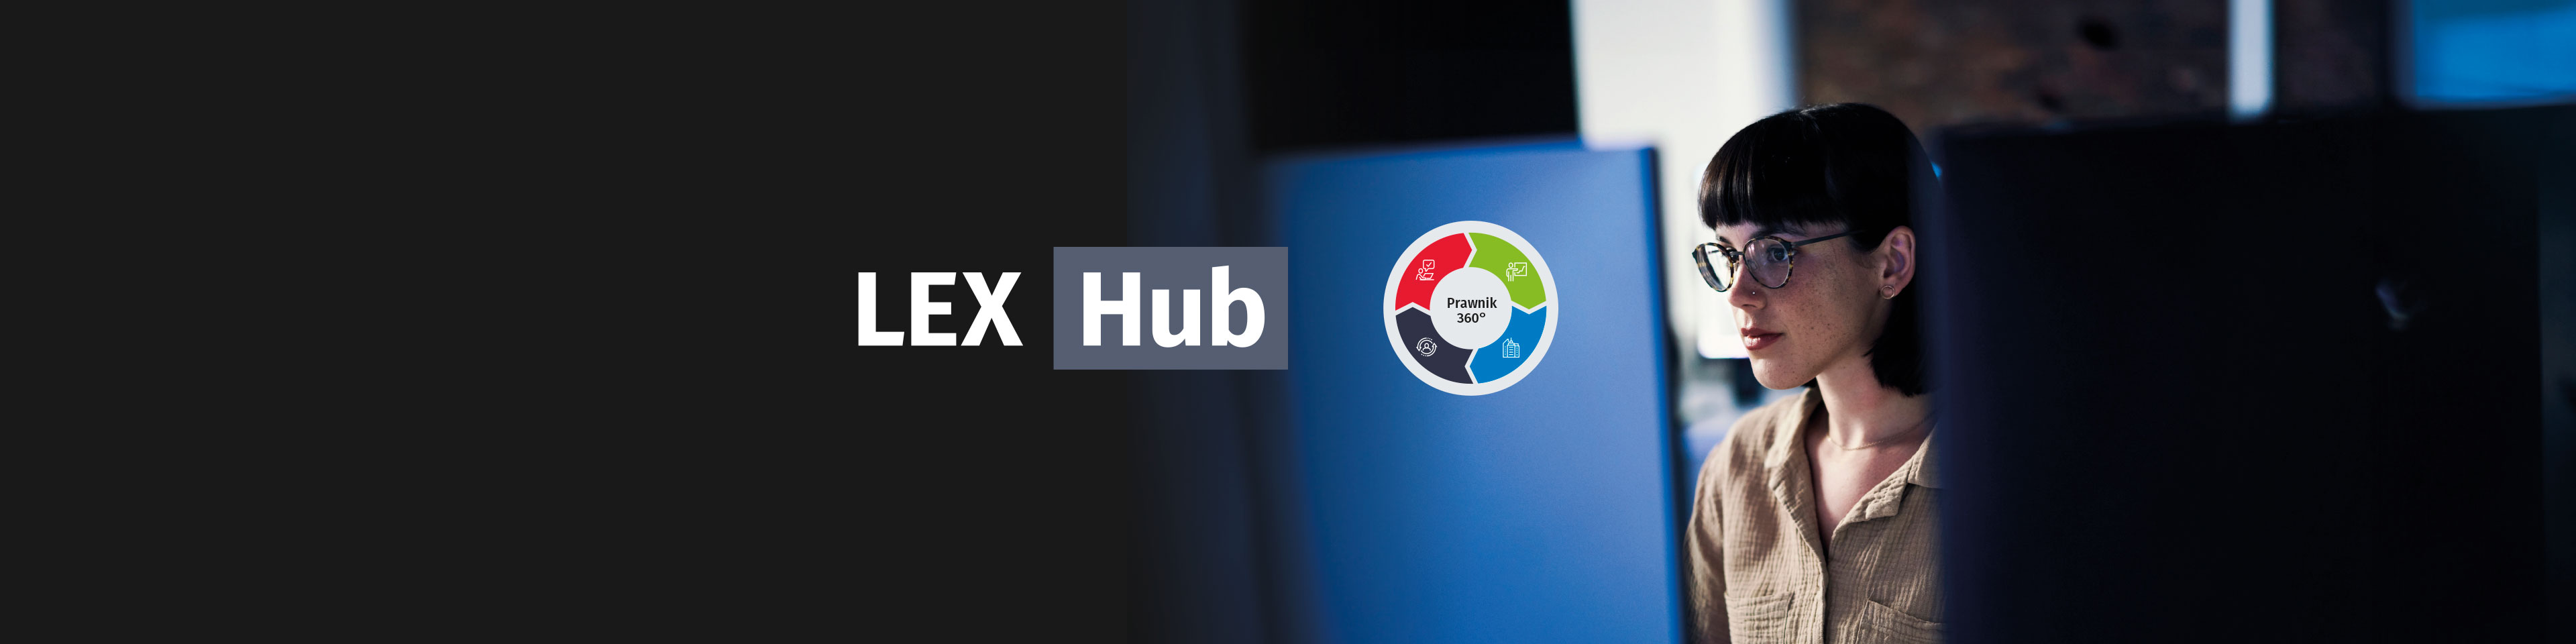 LEX Hub image